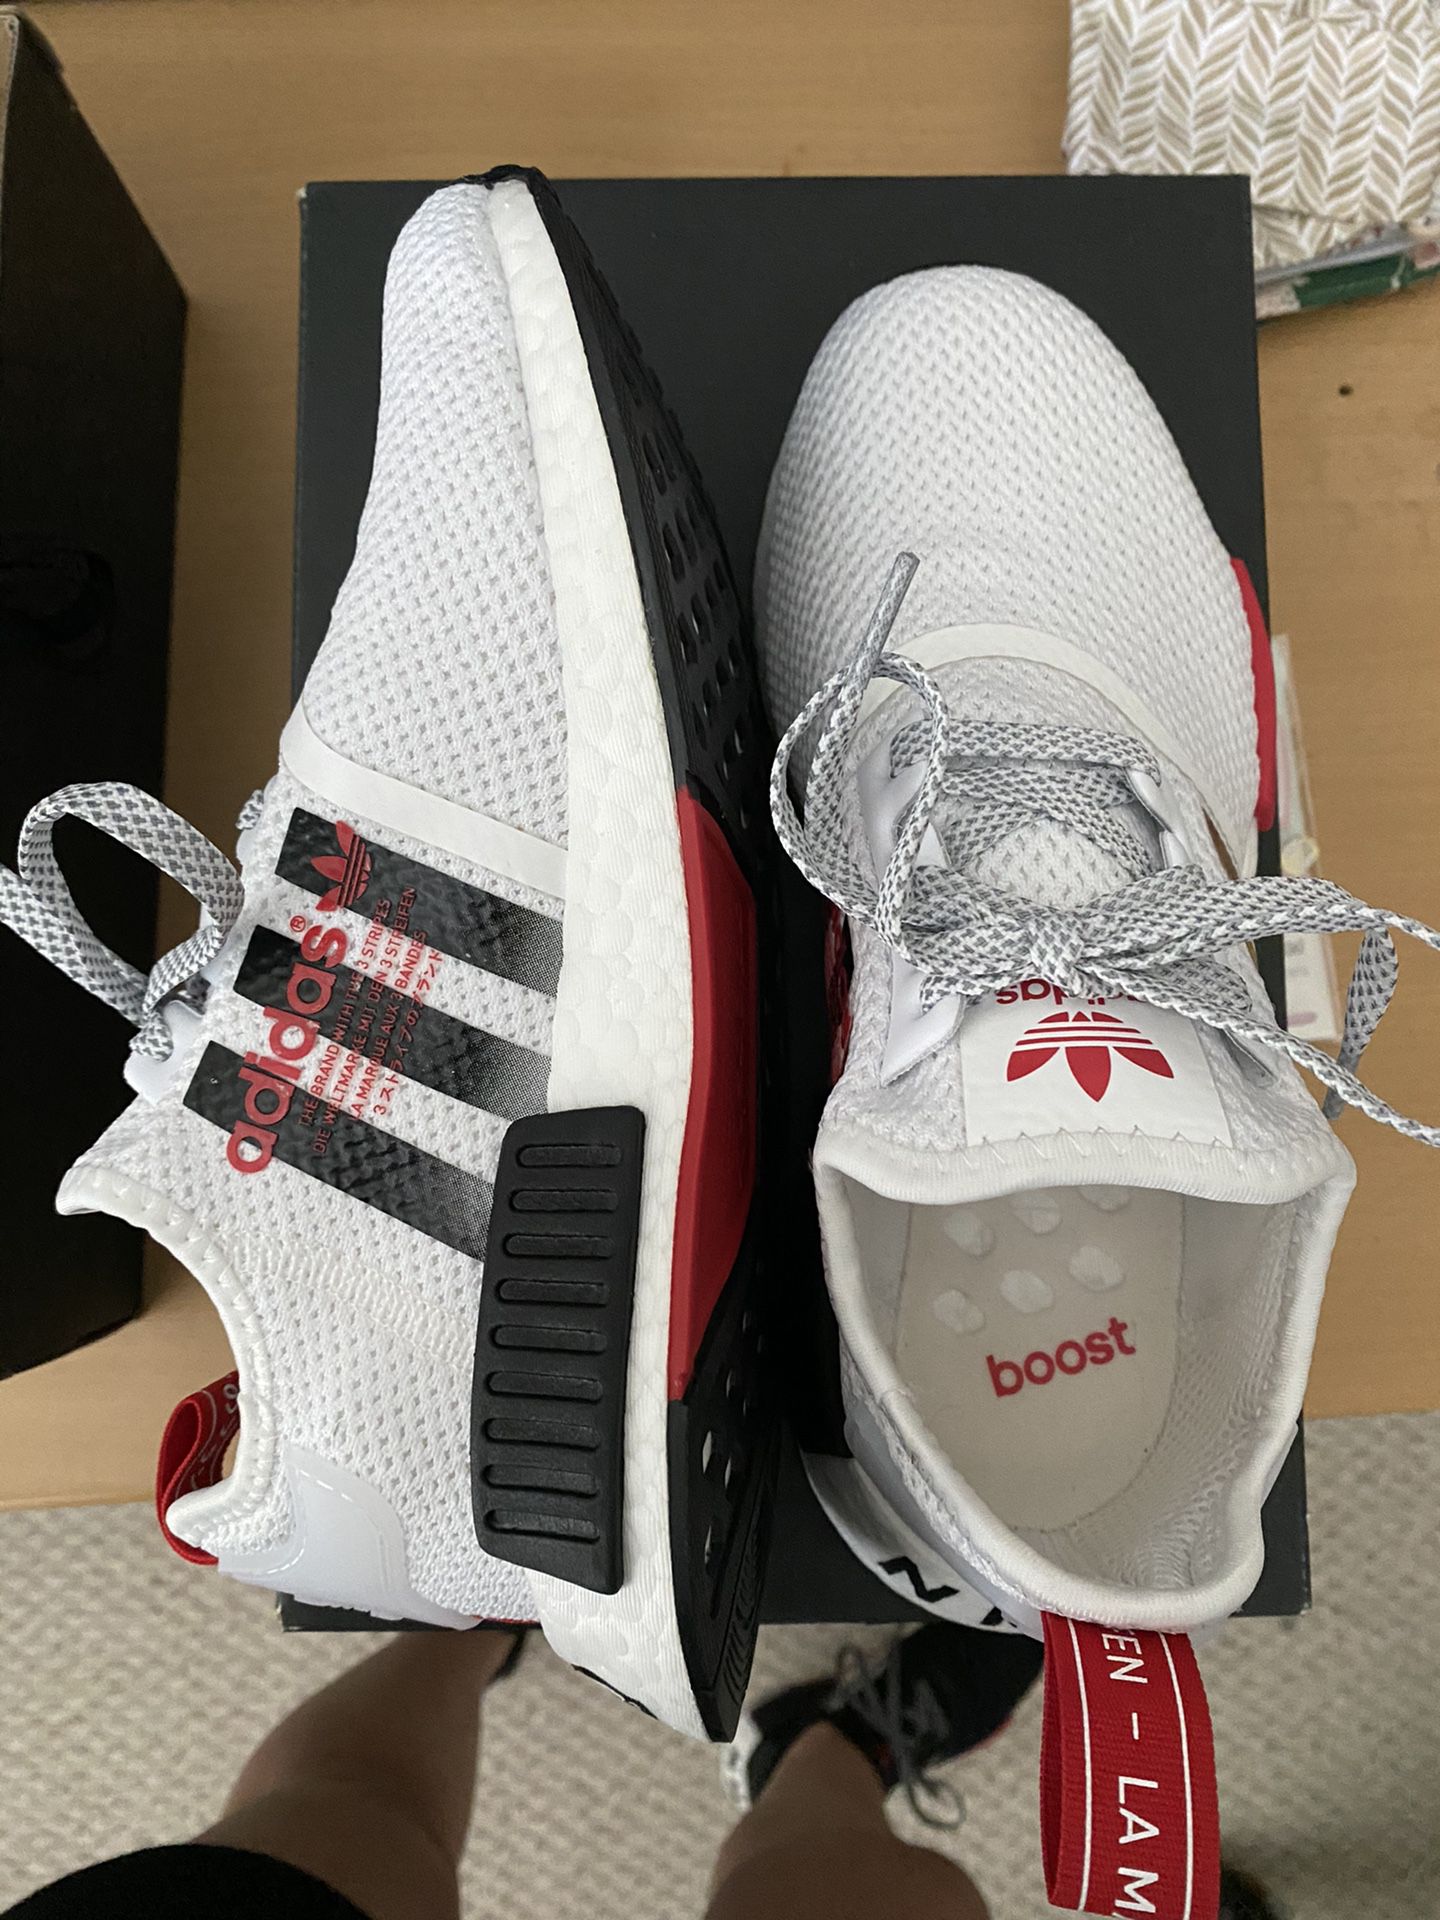 Adidas NMD, Red/White, Size 6 (Big Kids)